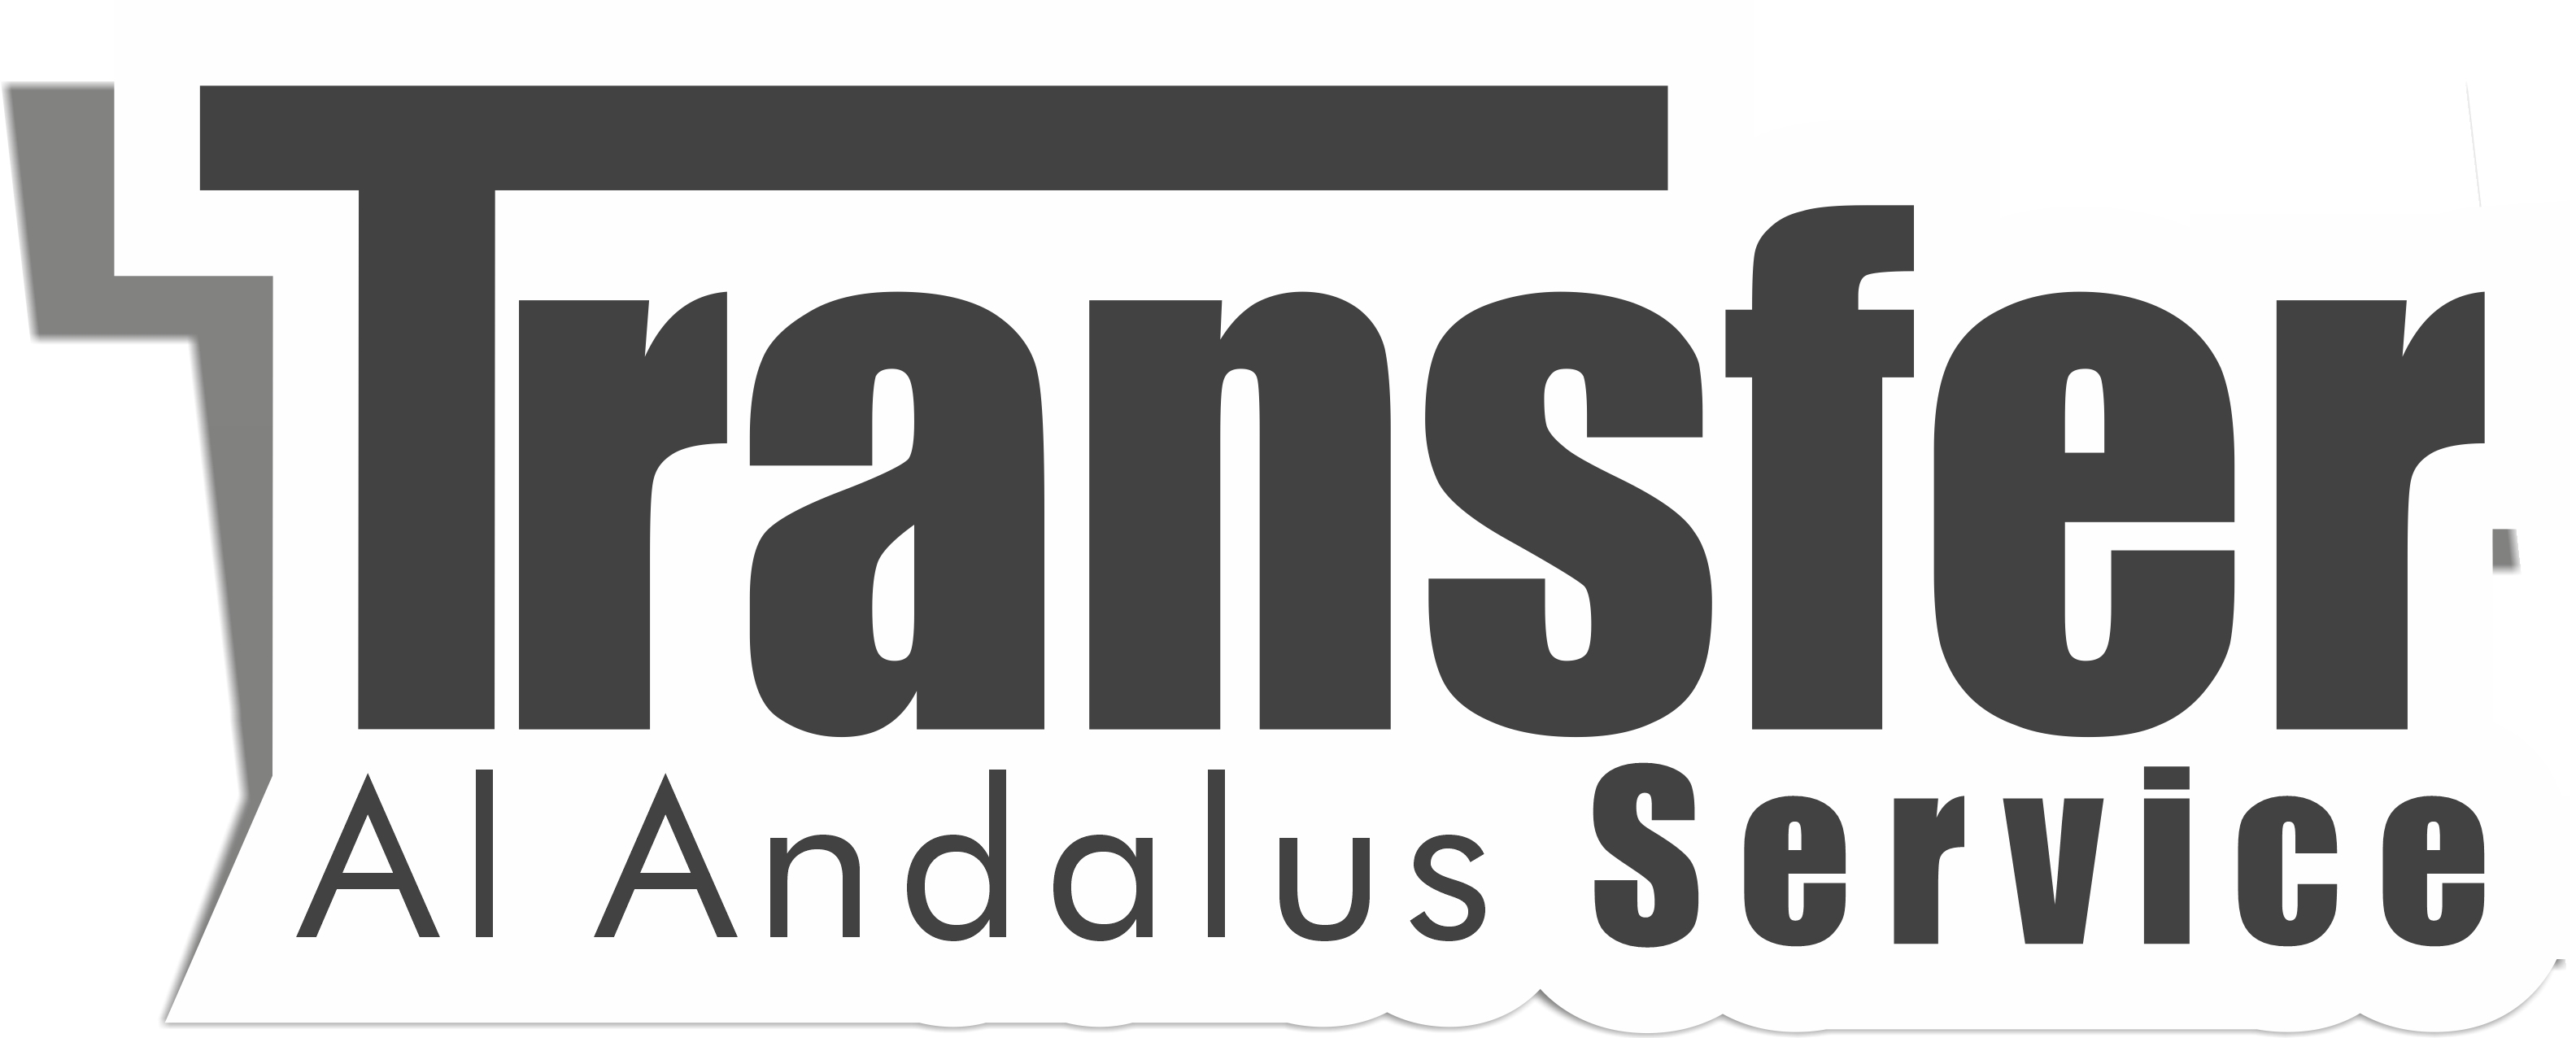 logo-transfer-alandalus